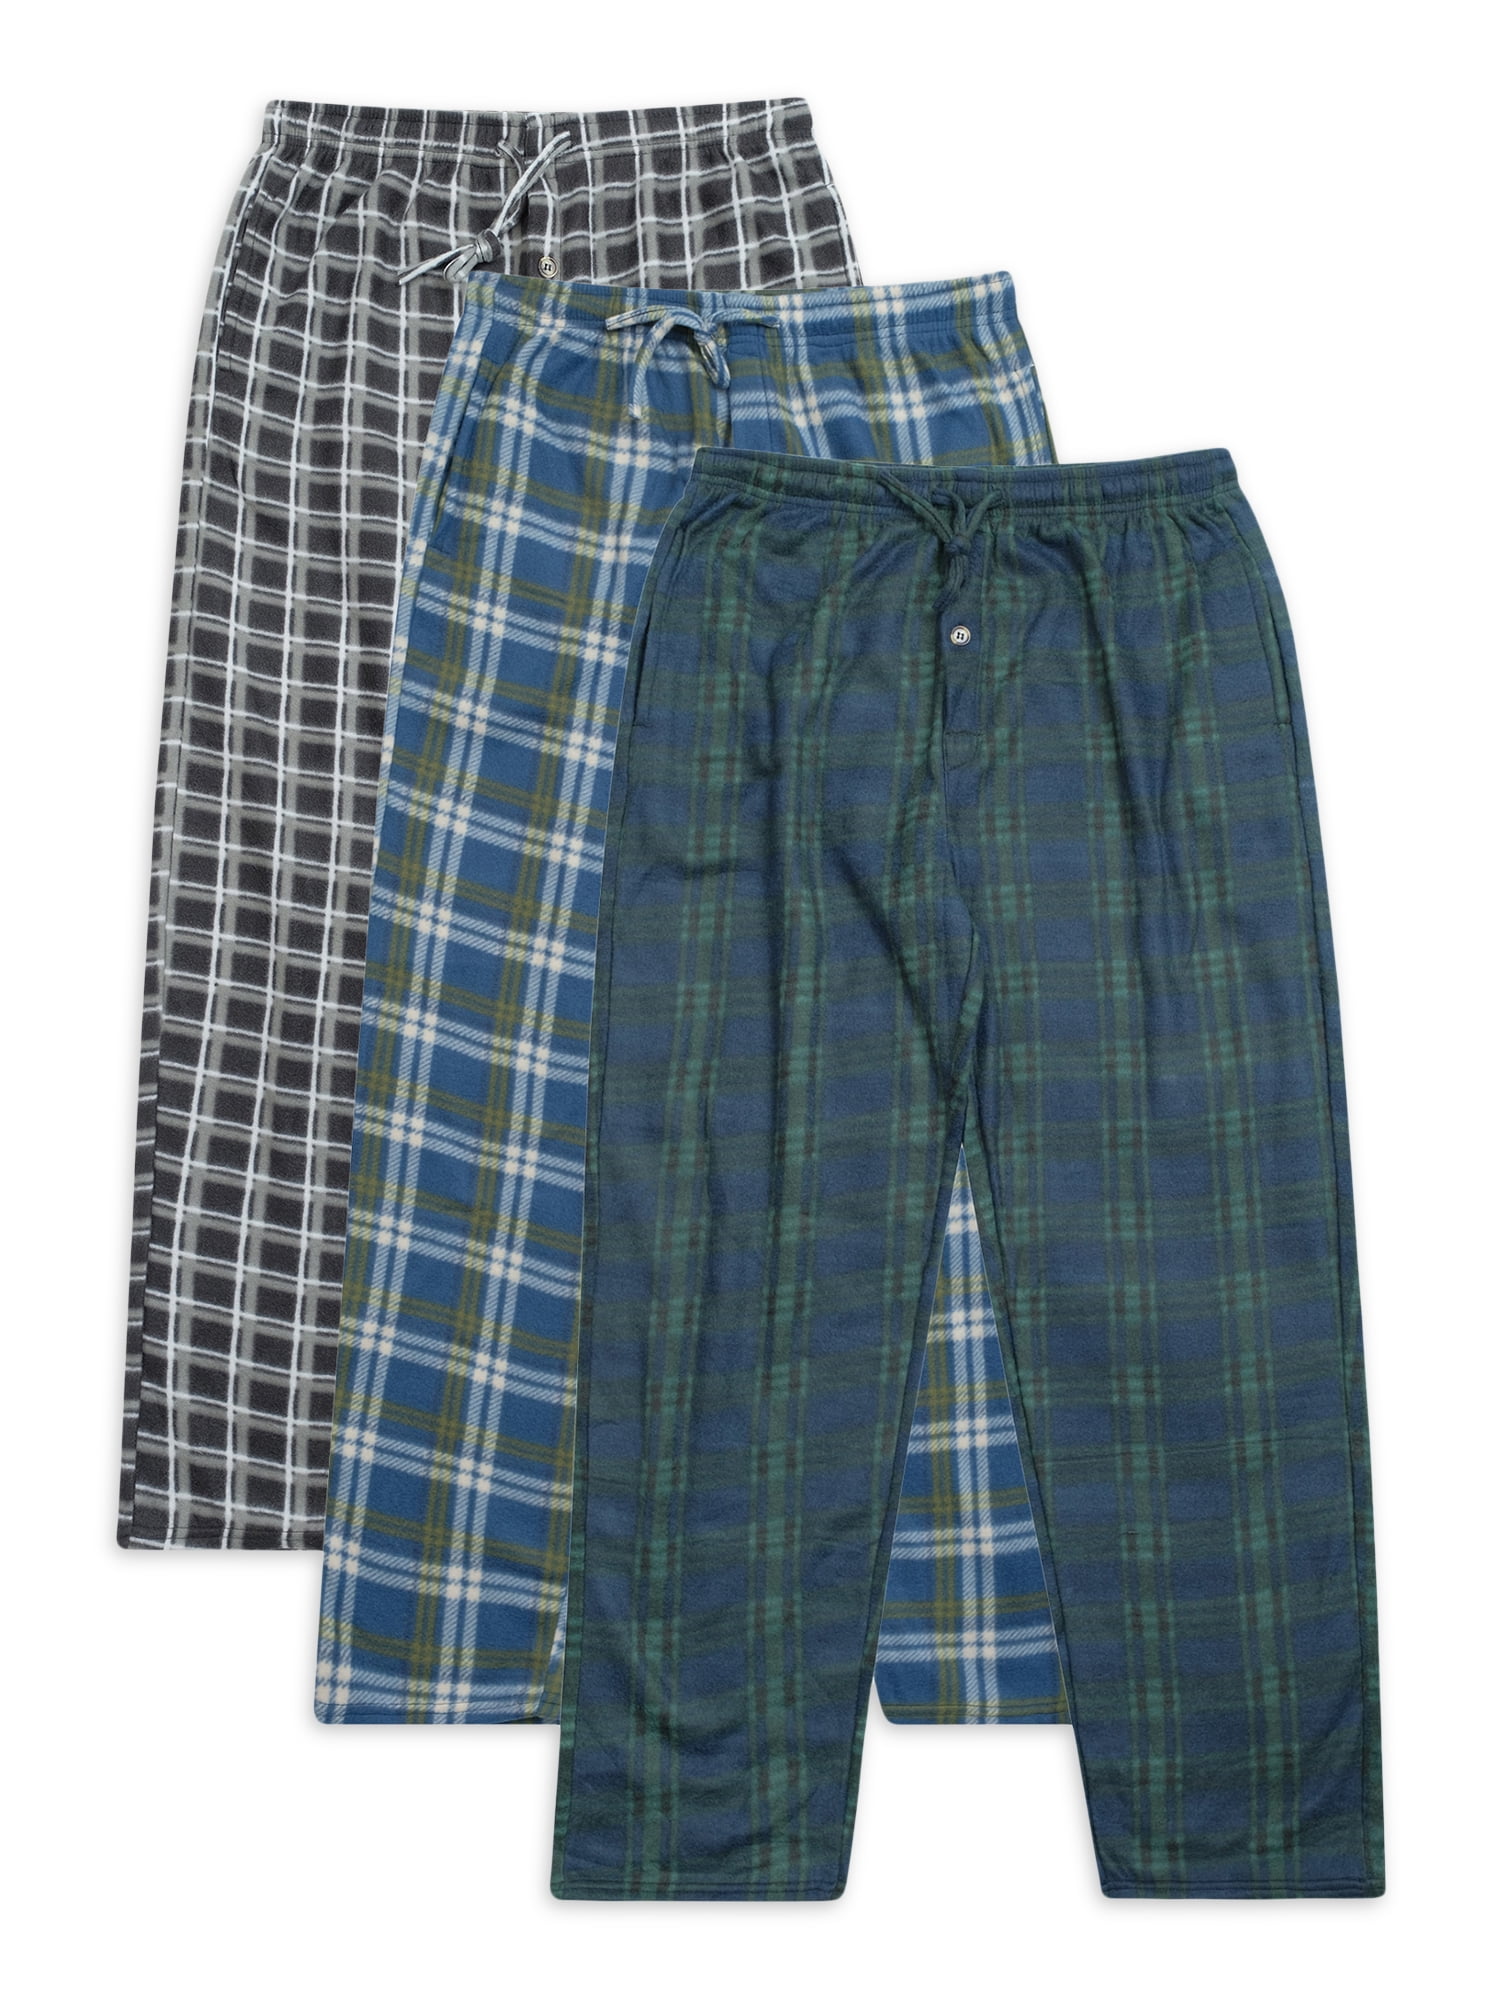 NEW Boys Fleece Lounge Pants XS 4-5 Soft Pajamas Sports Basketball Football 